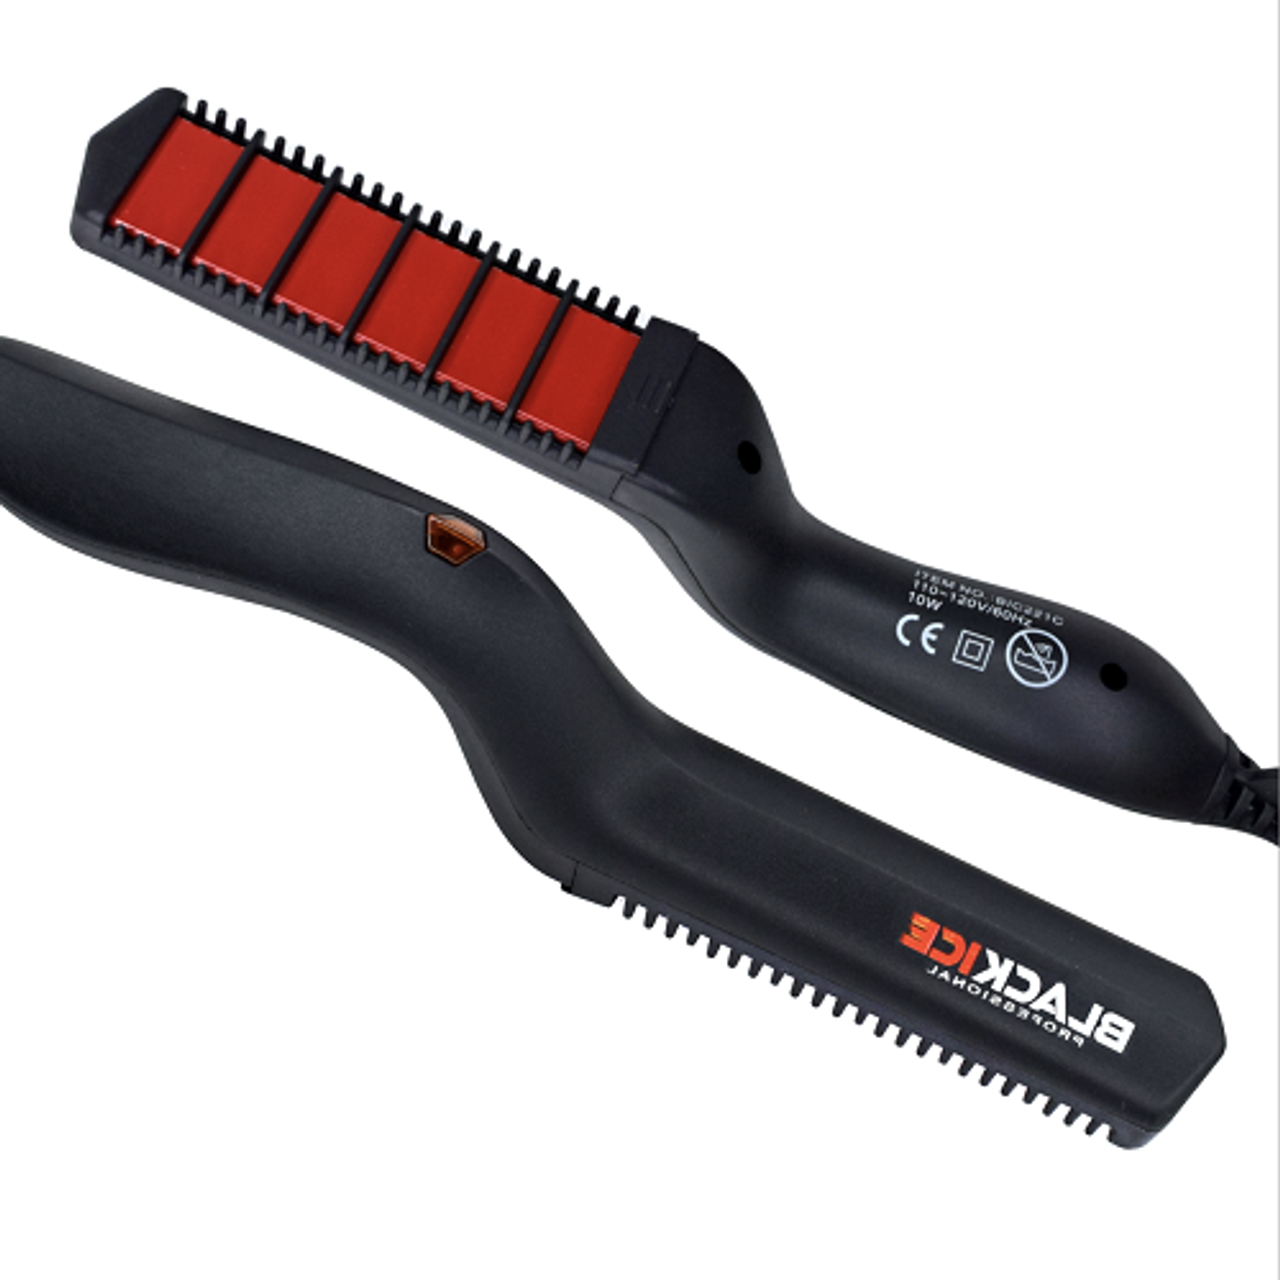 BLACKICE Pro Straightening Comb Designed for Men's Hair & Beard 